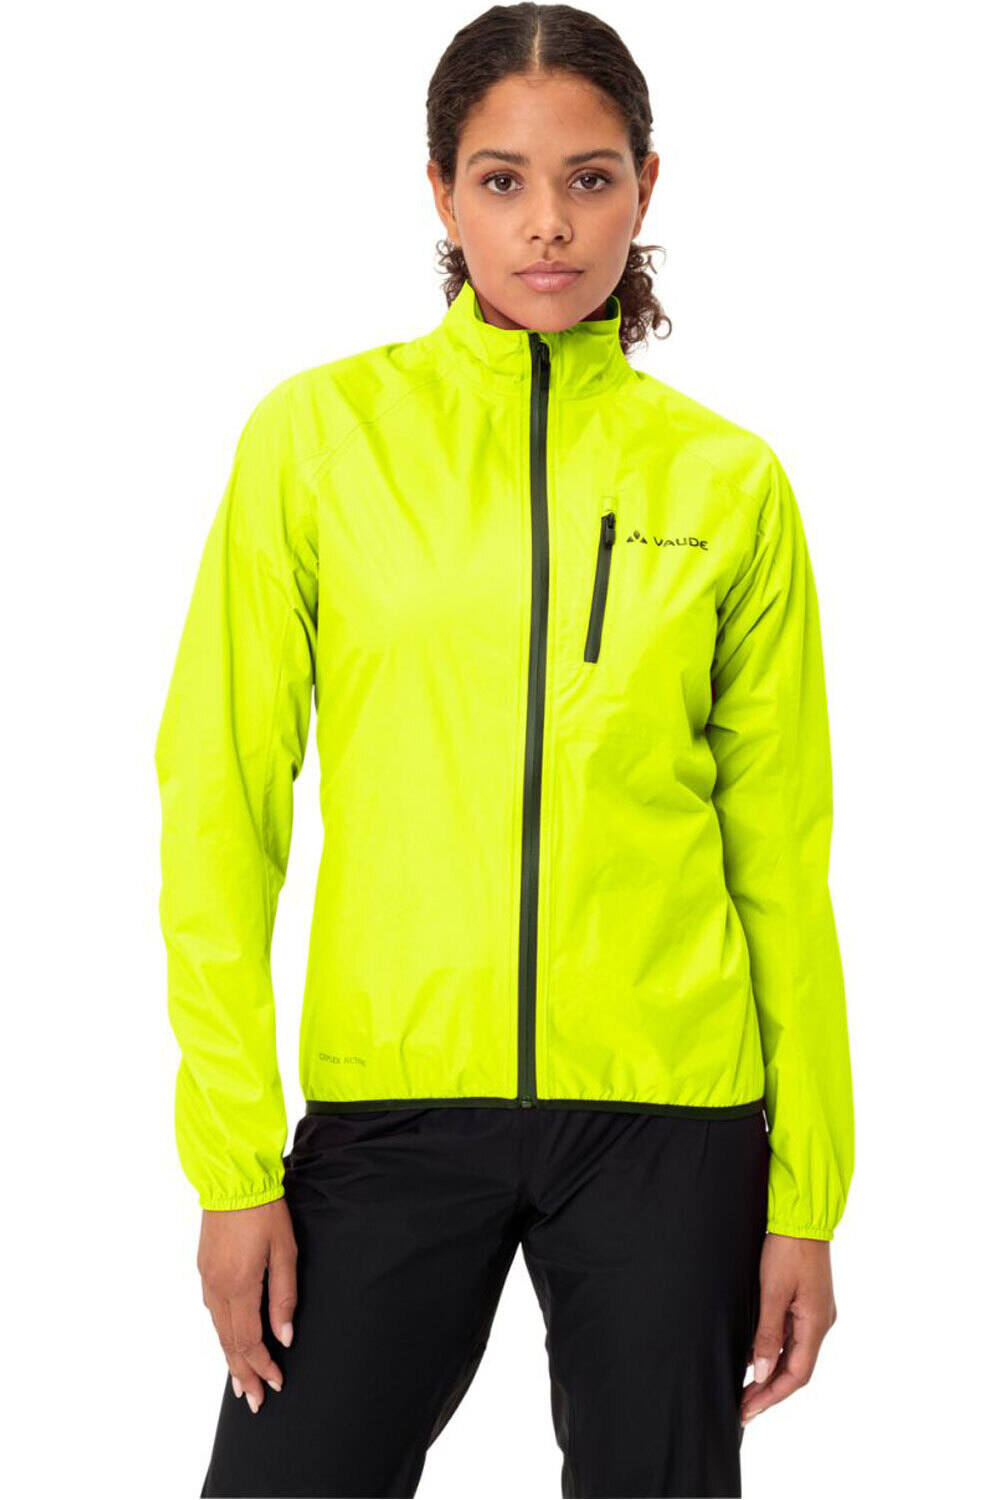 Vaude chaqueta impermeable ciclismo mujer Women's Drop Jacket III vista frontal